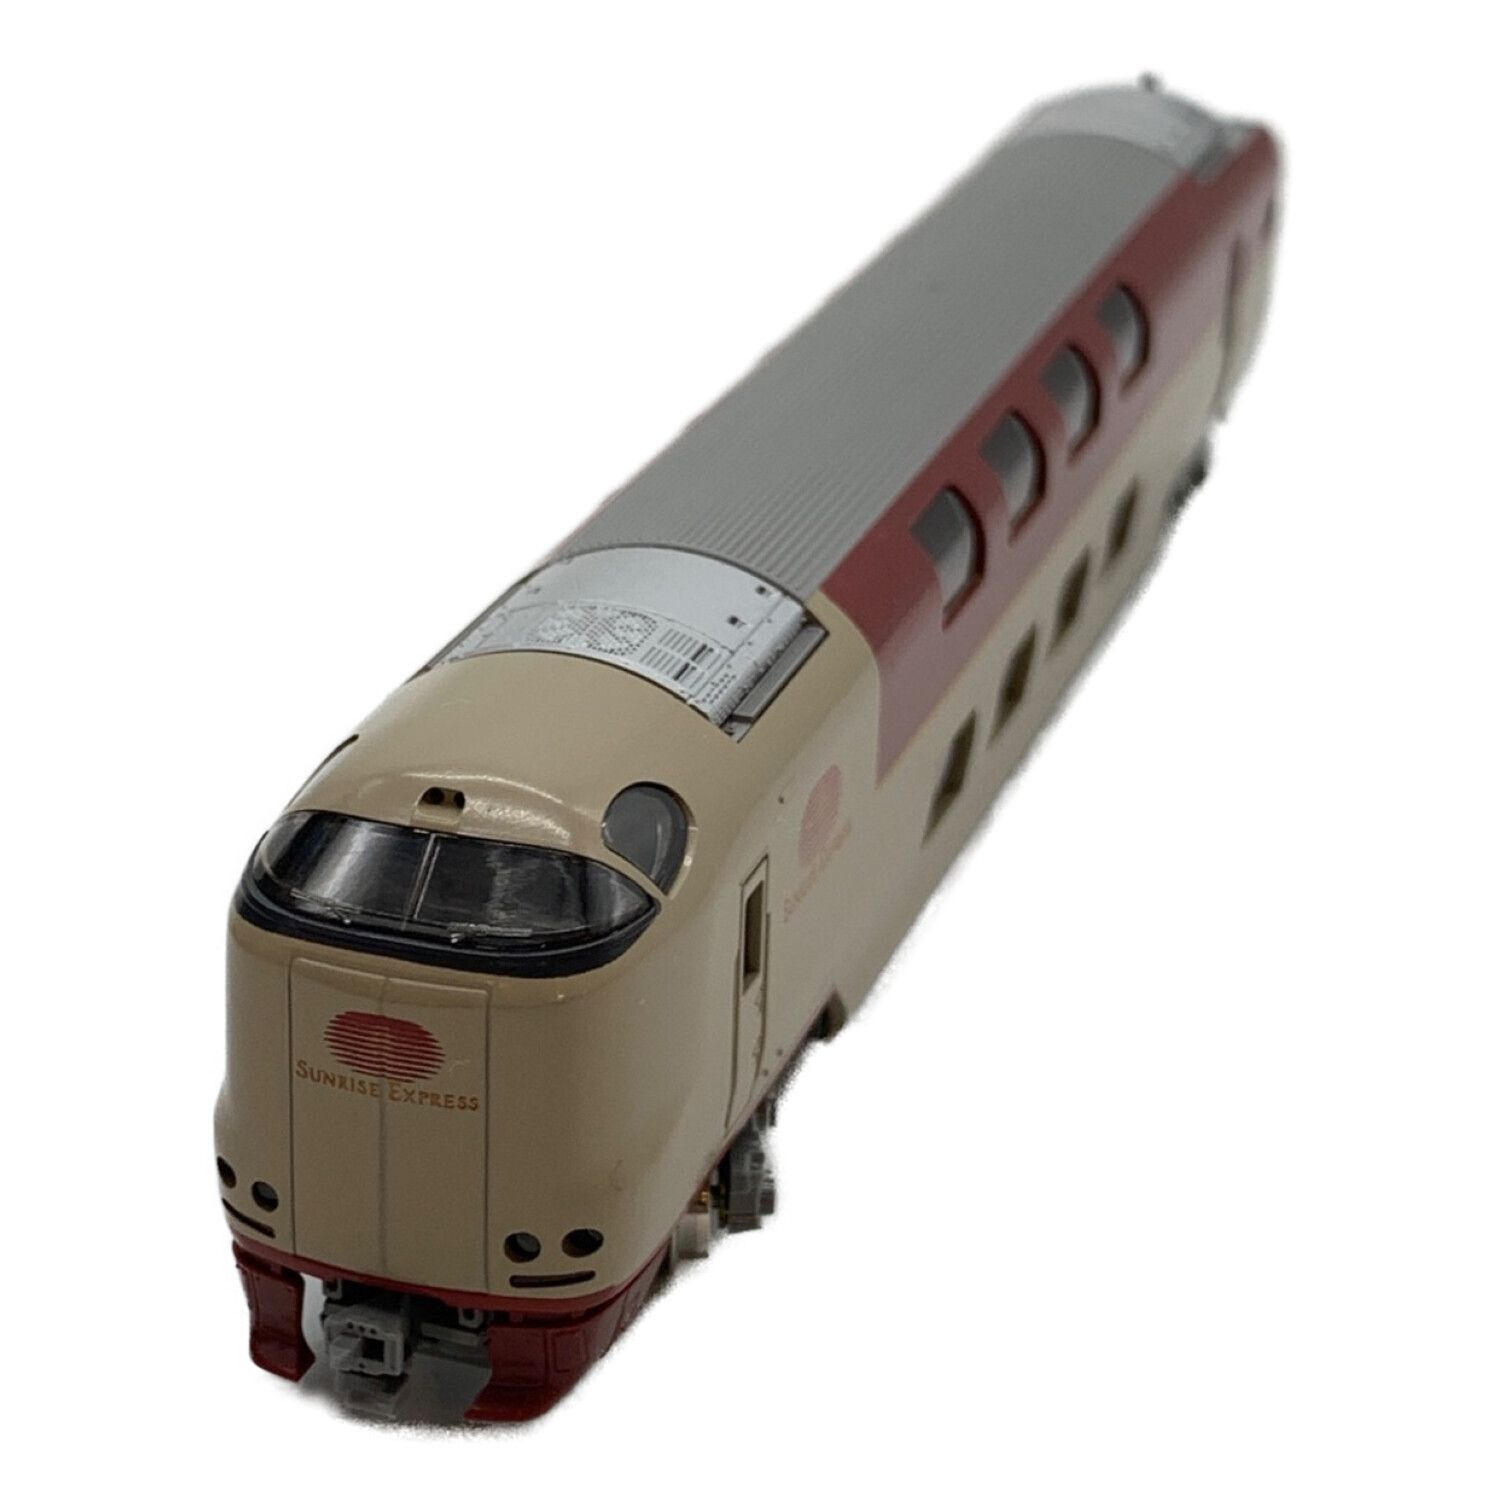 Nゲージ KATO 285 0系 サンライズエクスプレス 10-386種類車両 - 鉄道模型